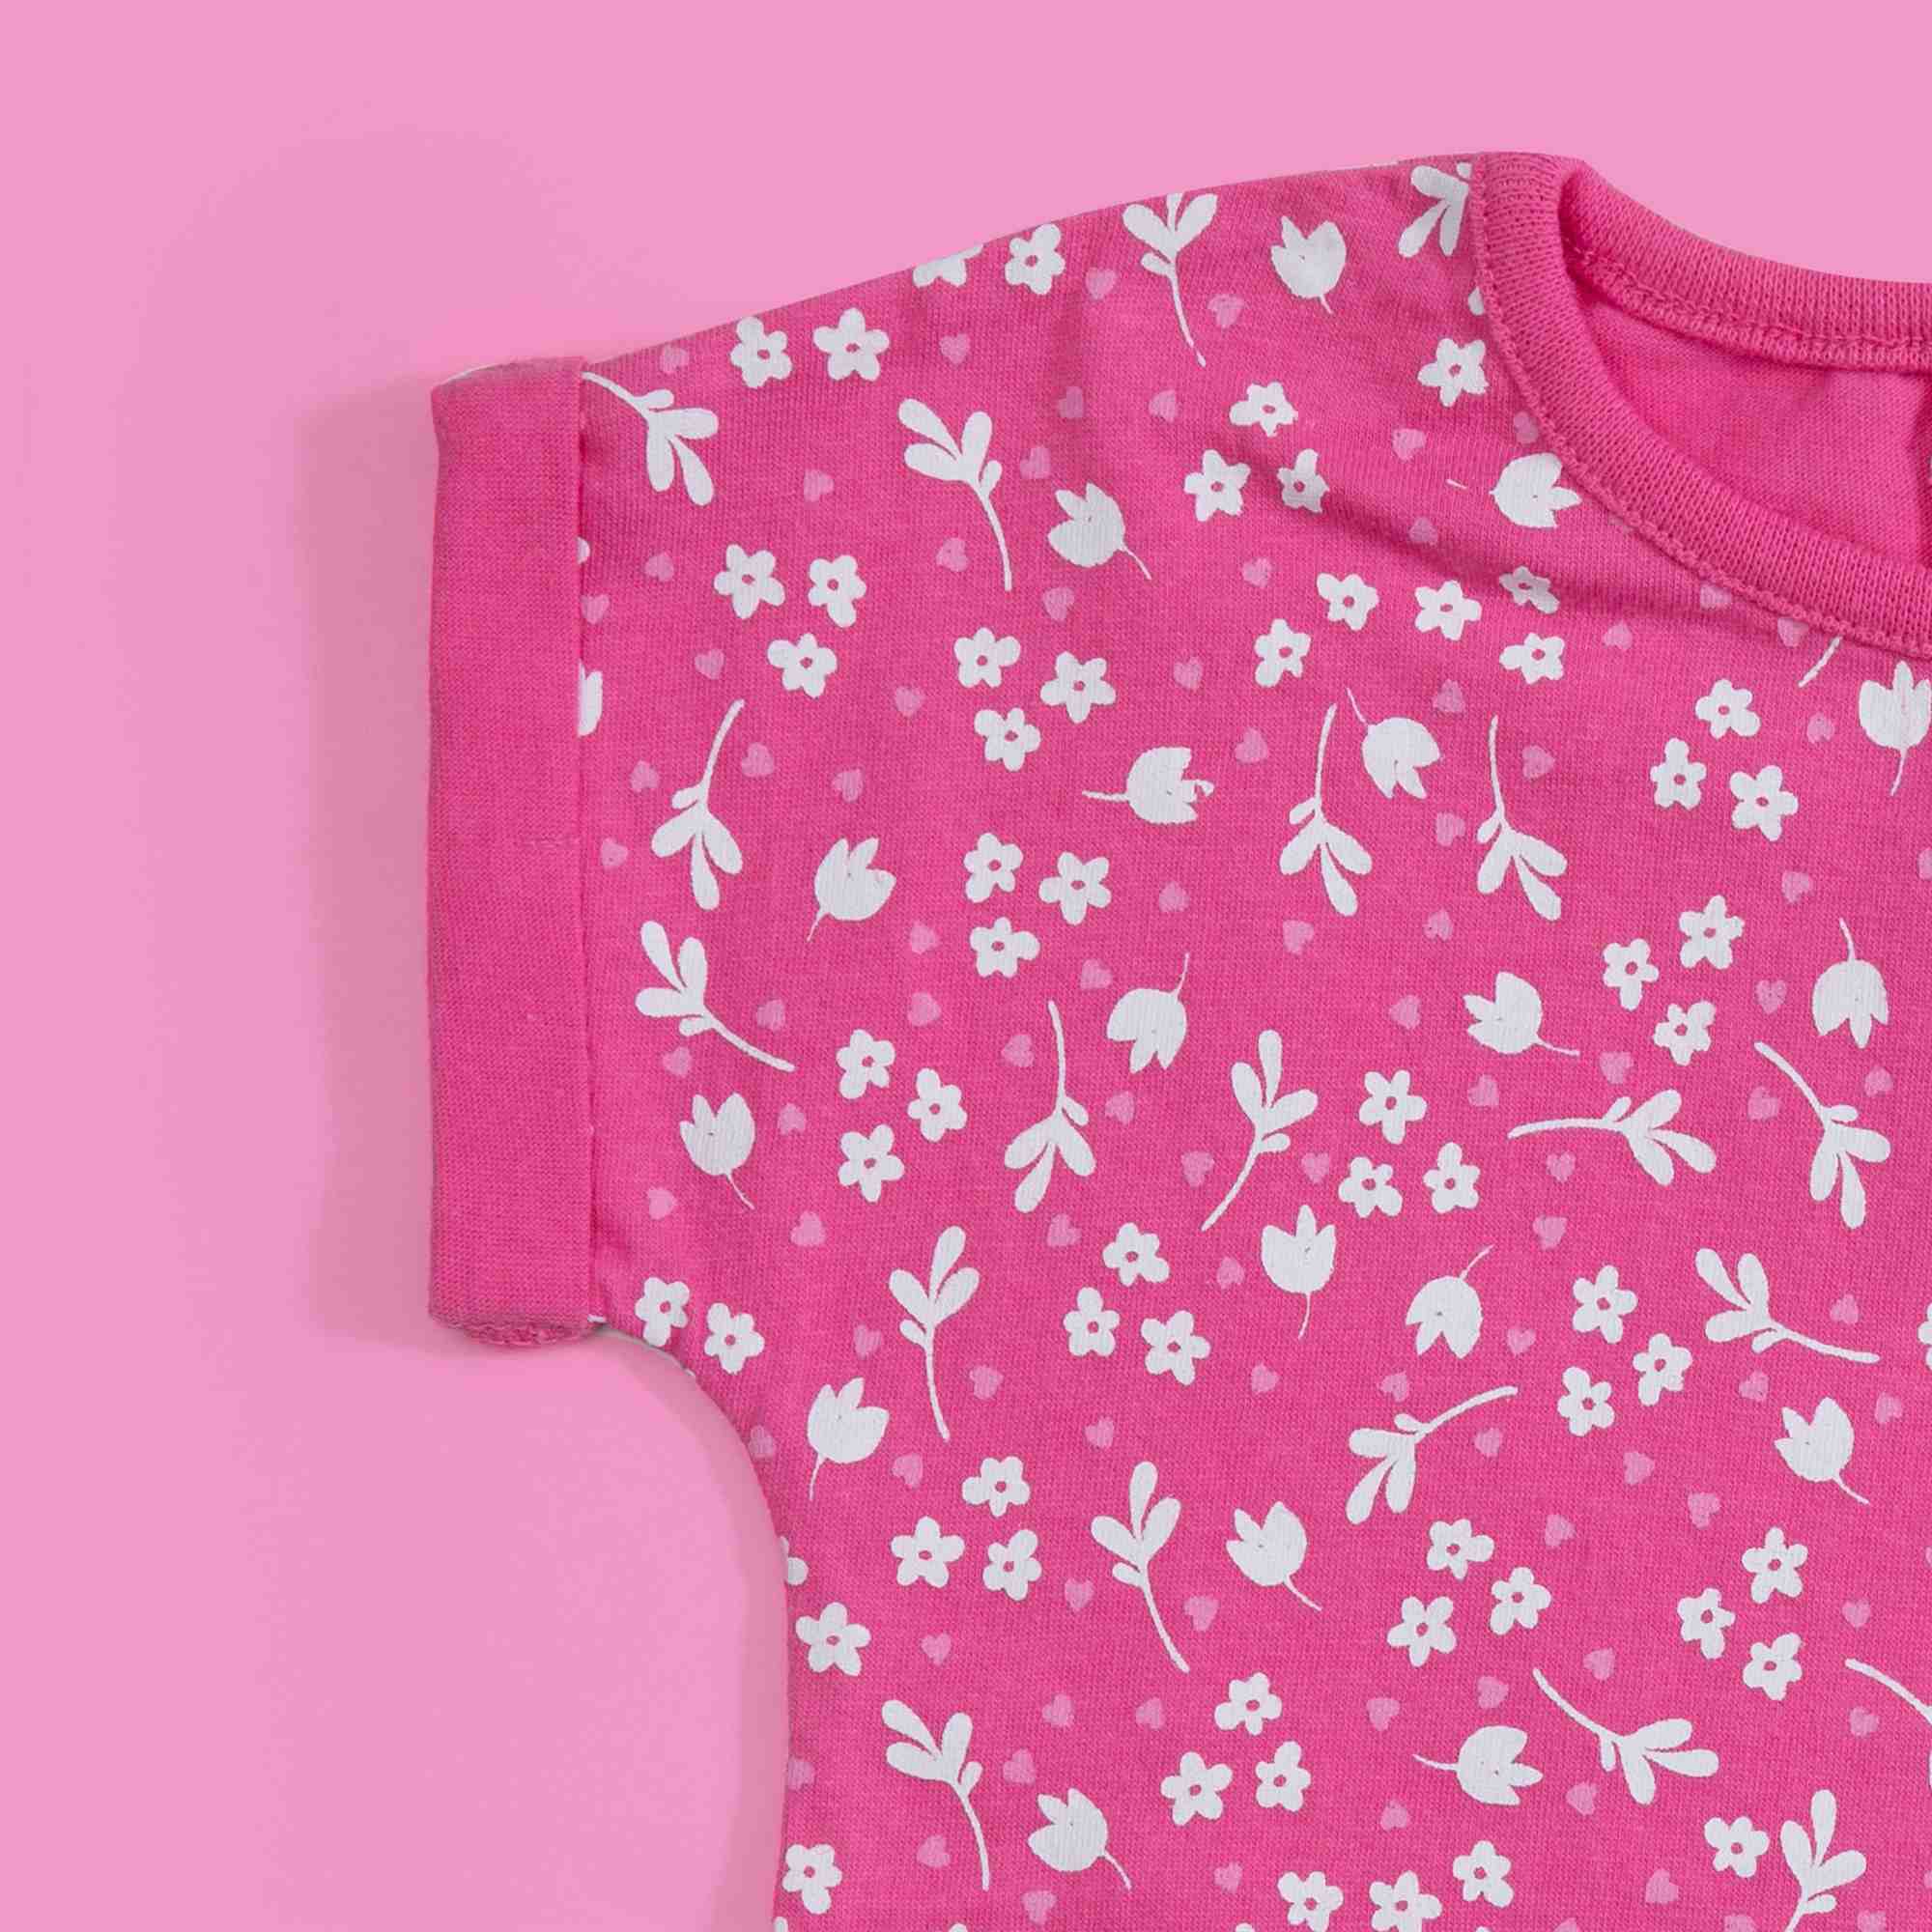 Mawi tshirt jersey stampa fiori - Mawi